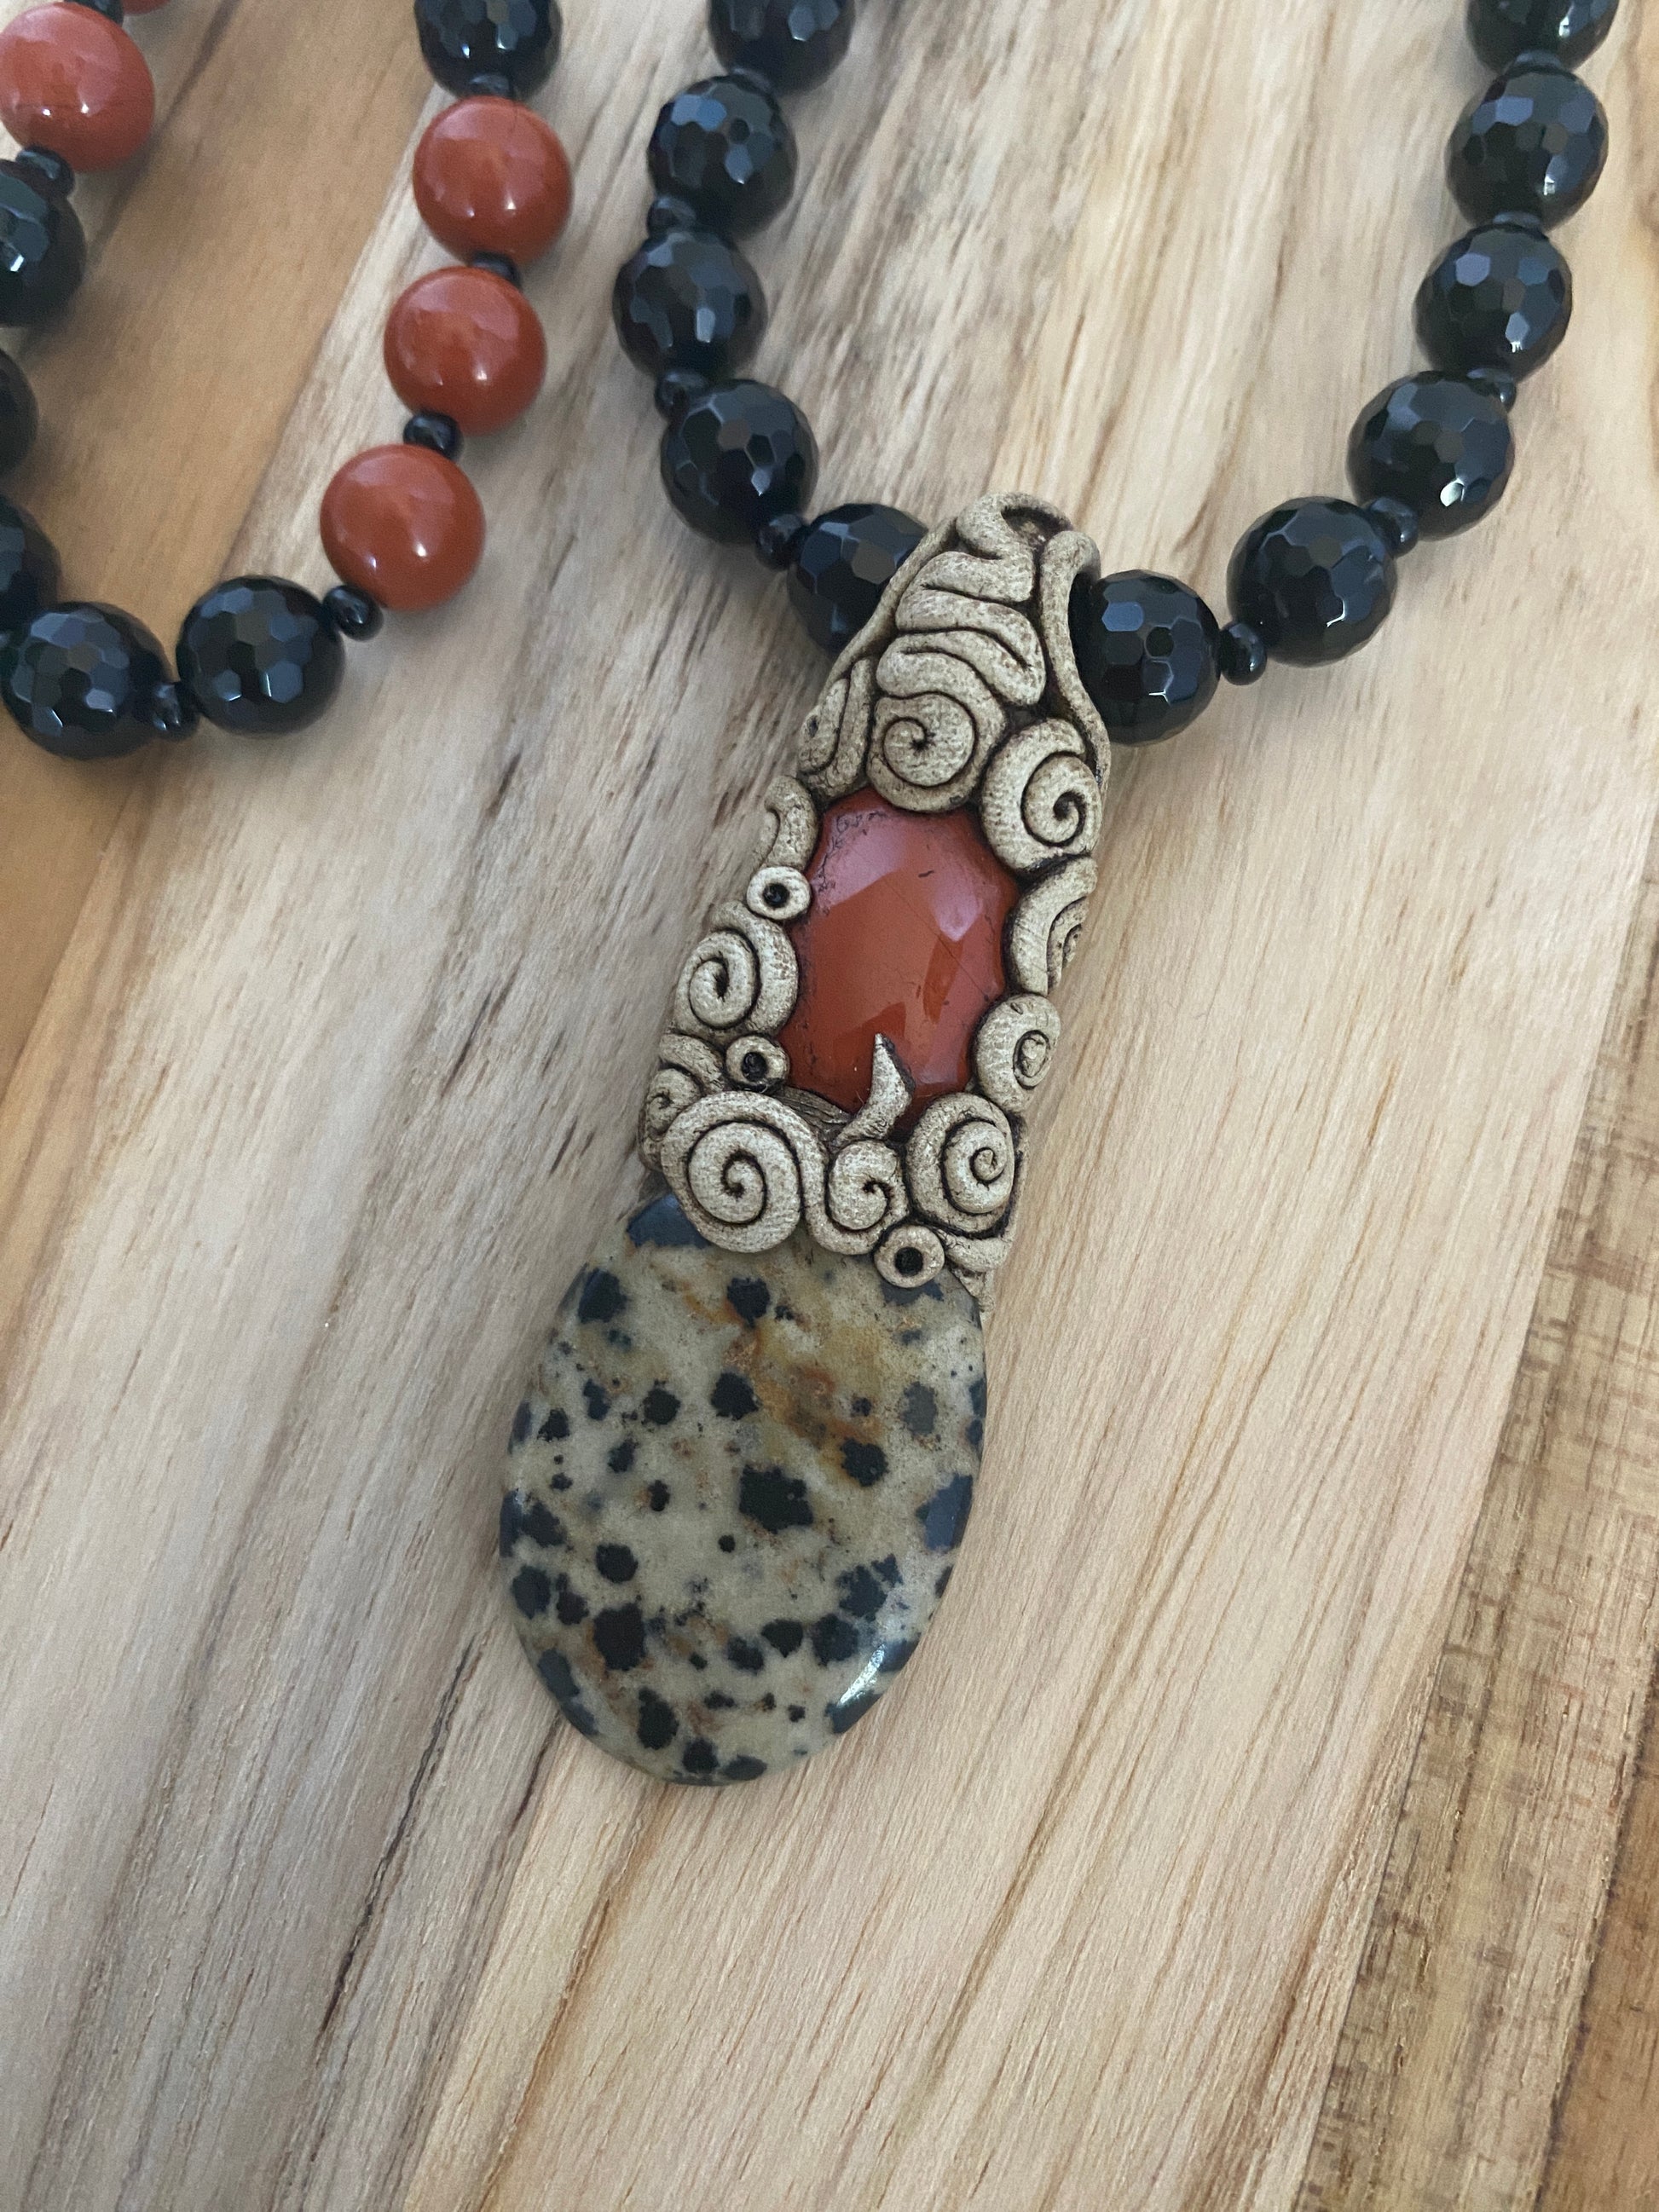 28" Long Polymer Clay Pendant Necklace with Dalmatian Jasper Red Jasper & Black Onyx Beads - My Urban Gems